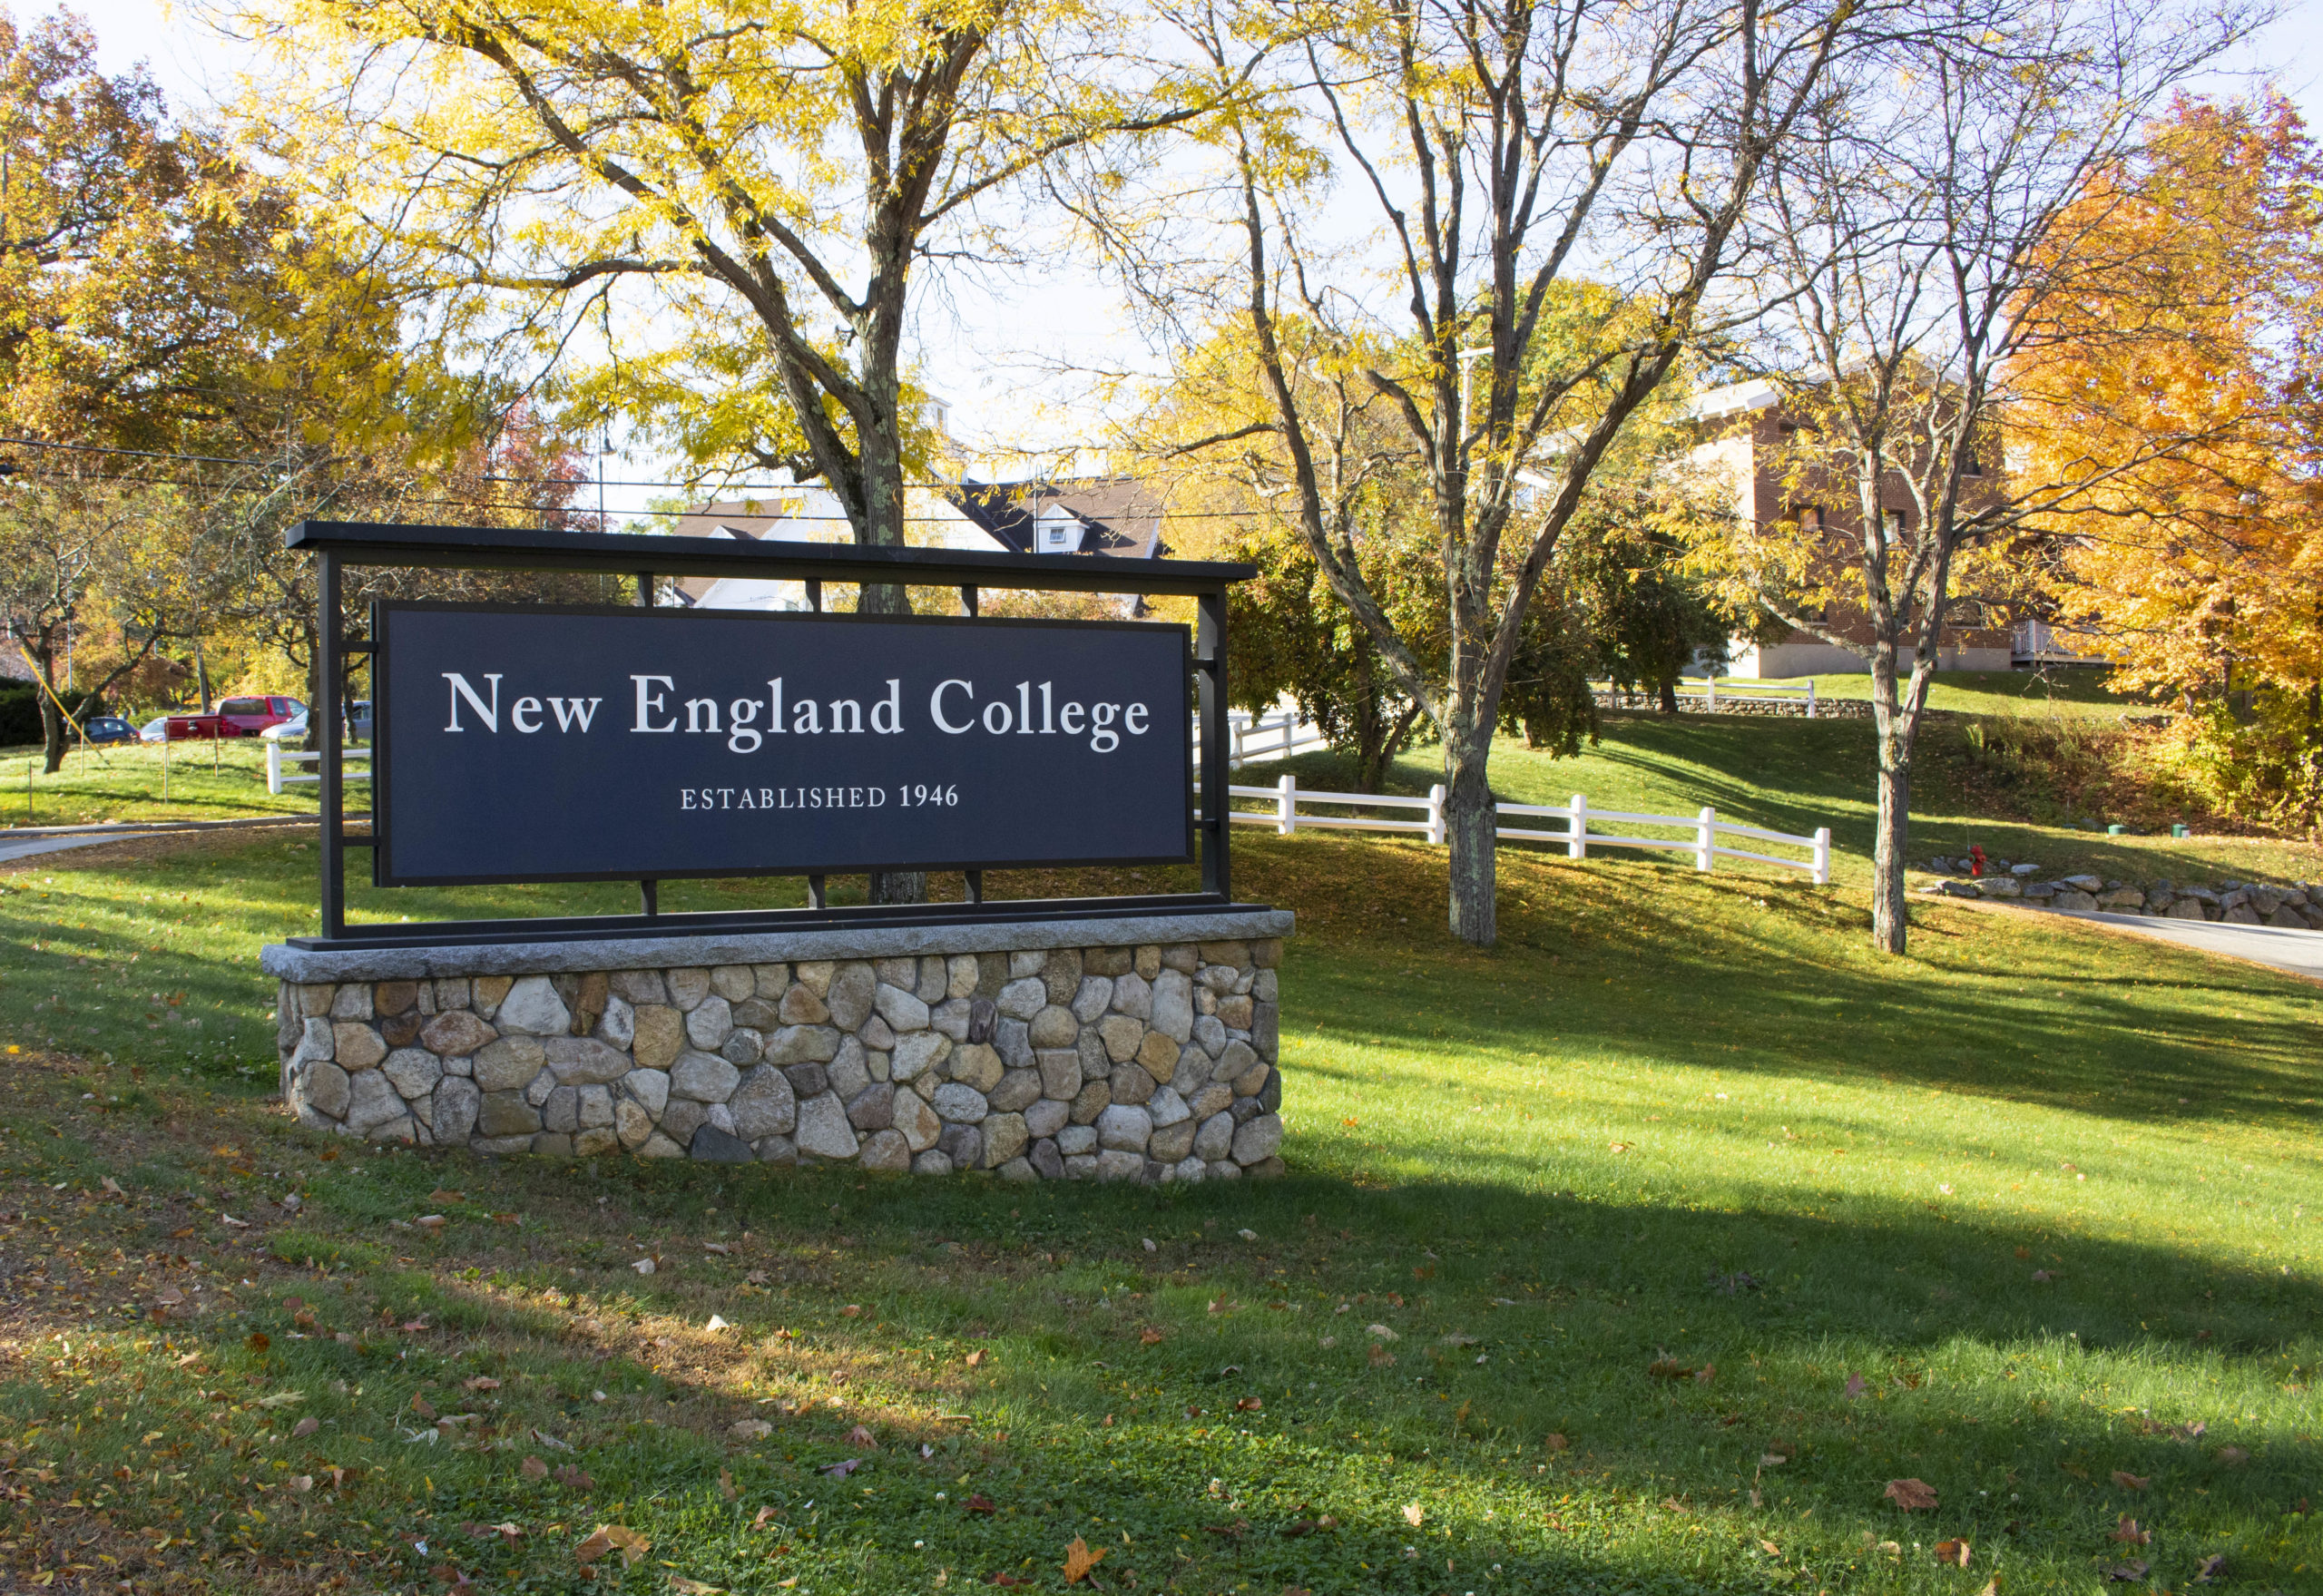 WMUR New England College to Add Football Program New England College